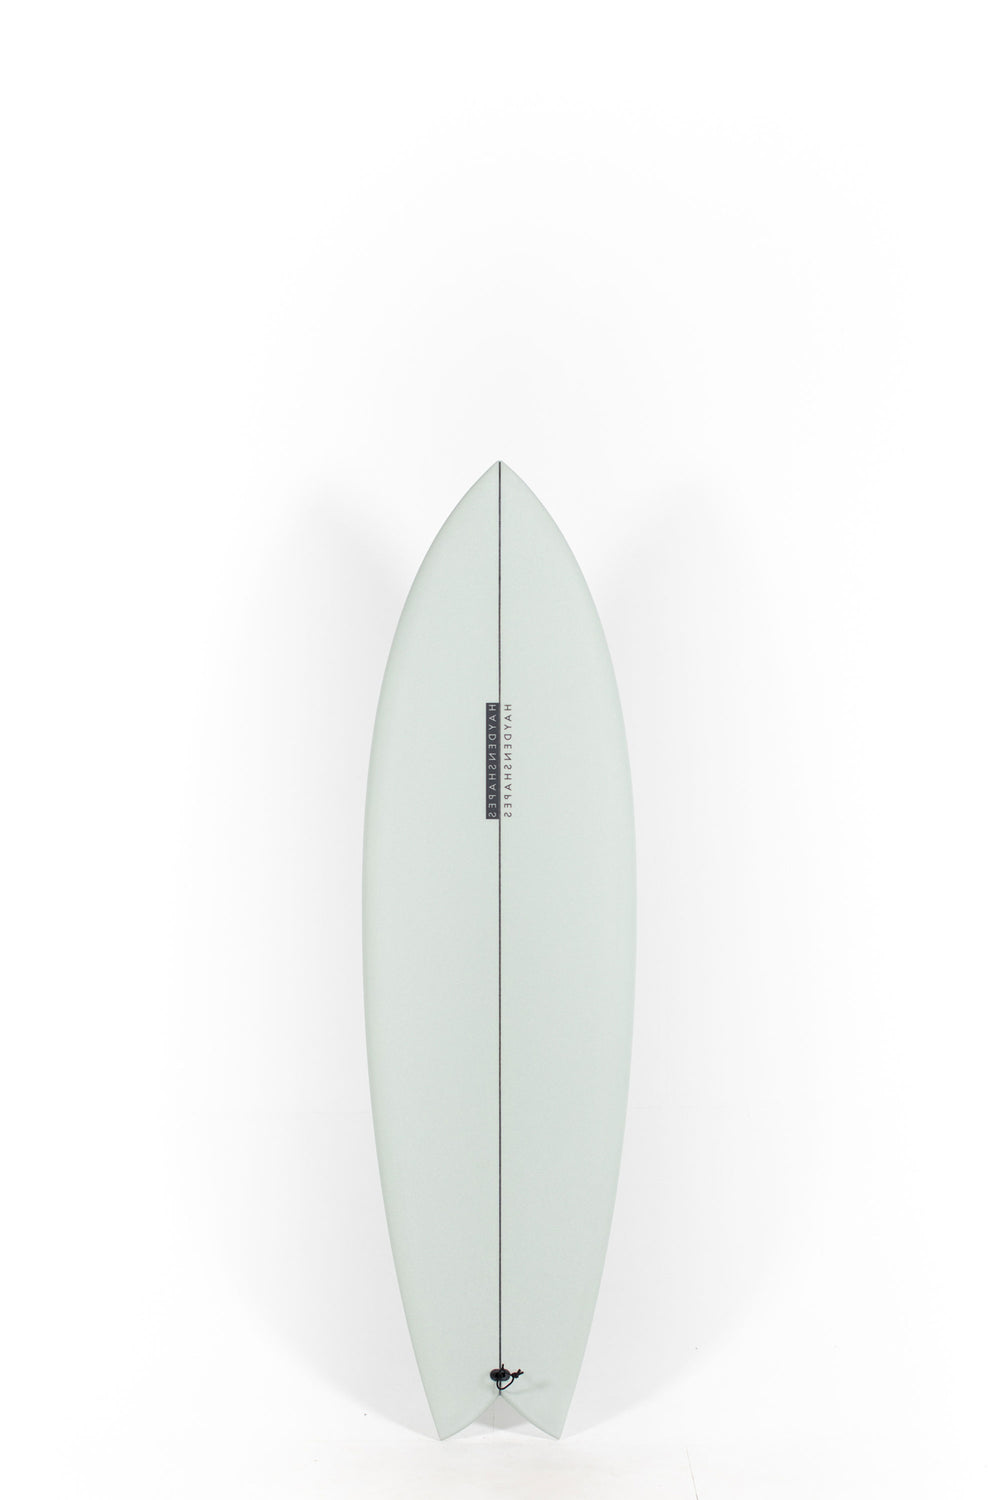 Pukas Surf Shop - HaydenShapes Surfboard - HYPTO KRYPTO TWIN PU - 6'2